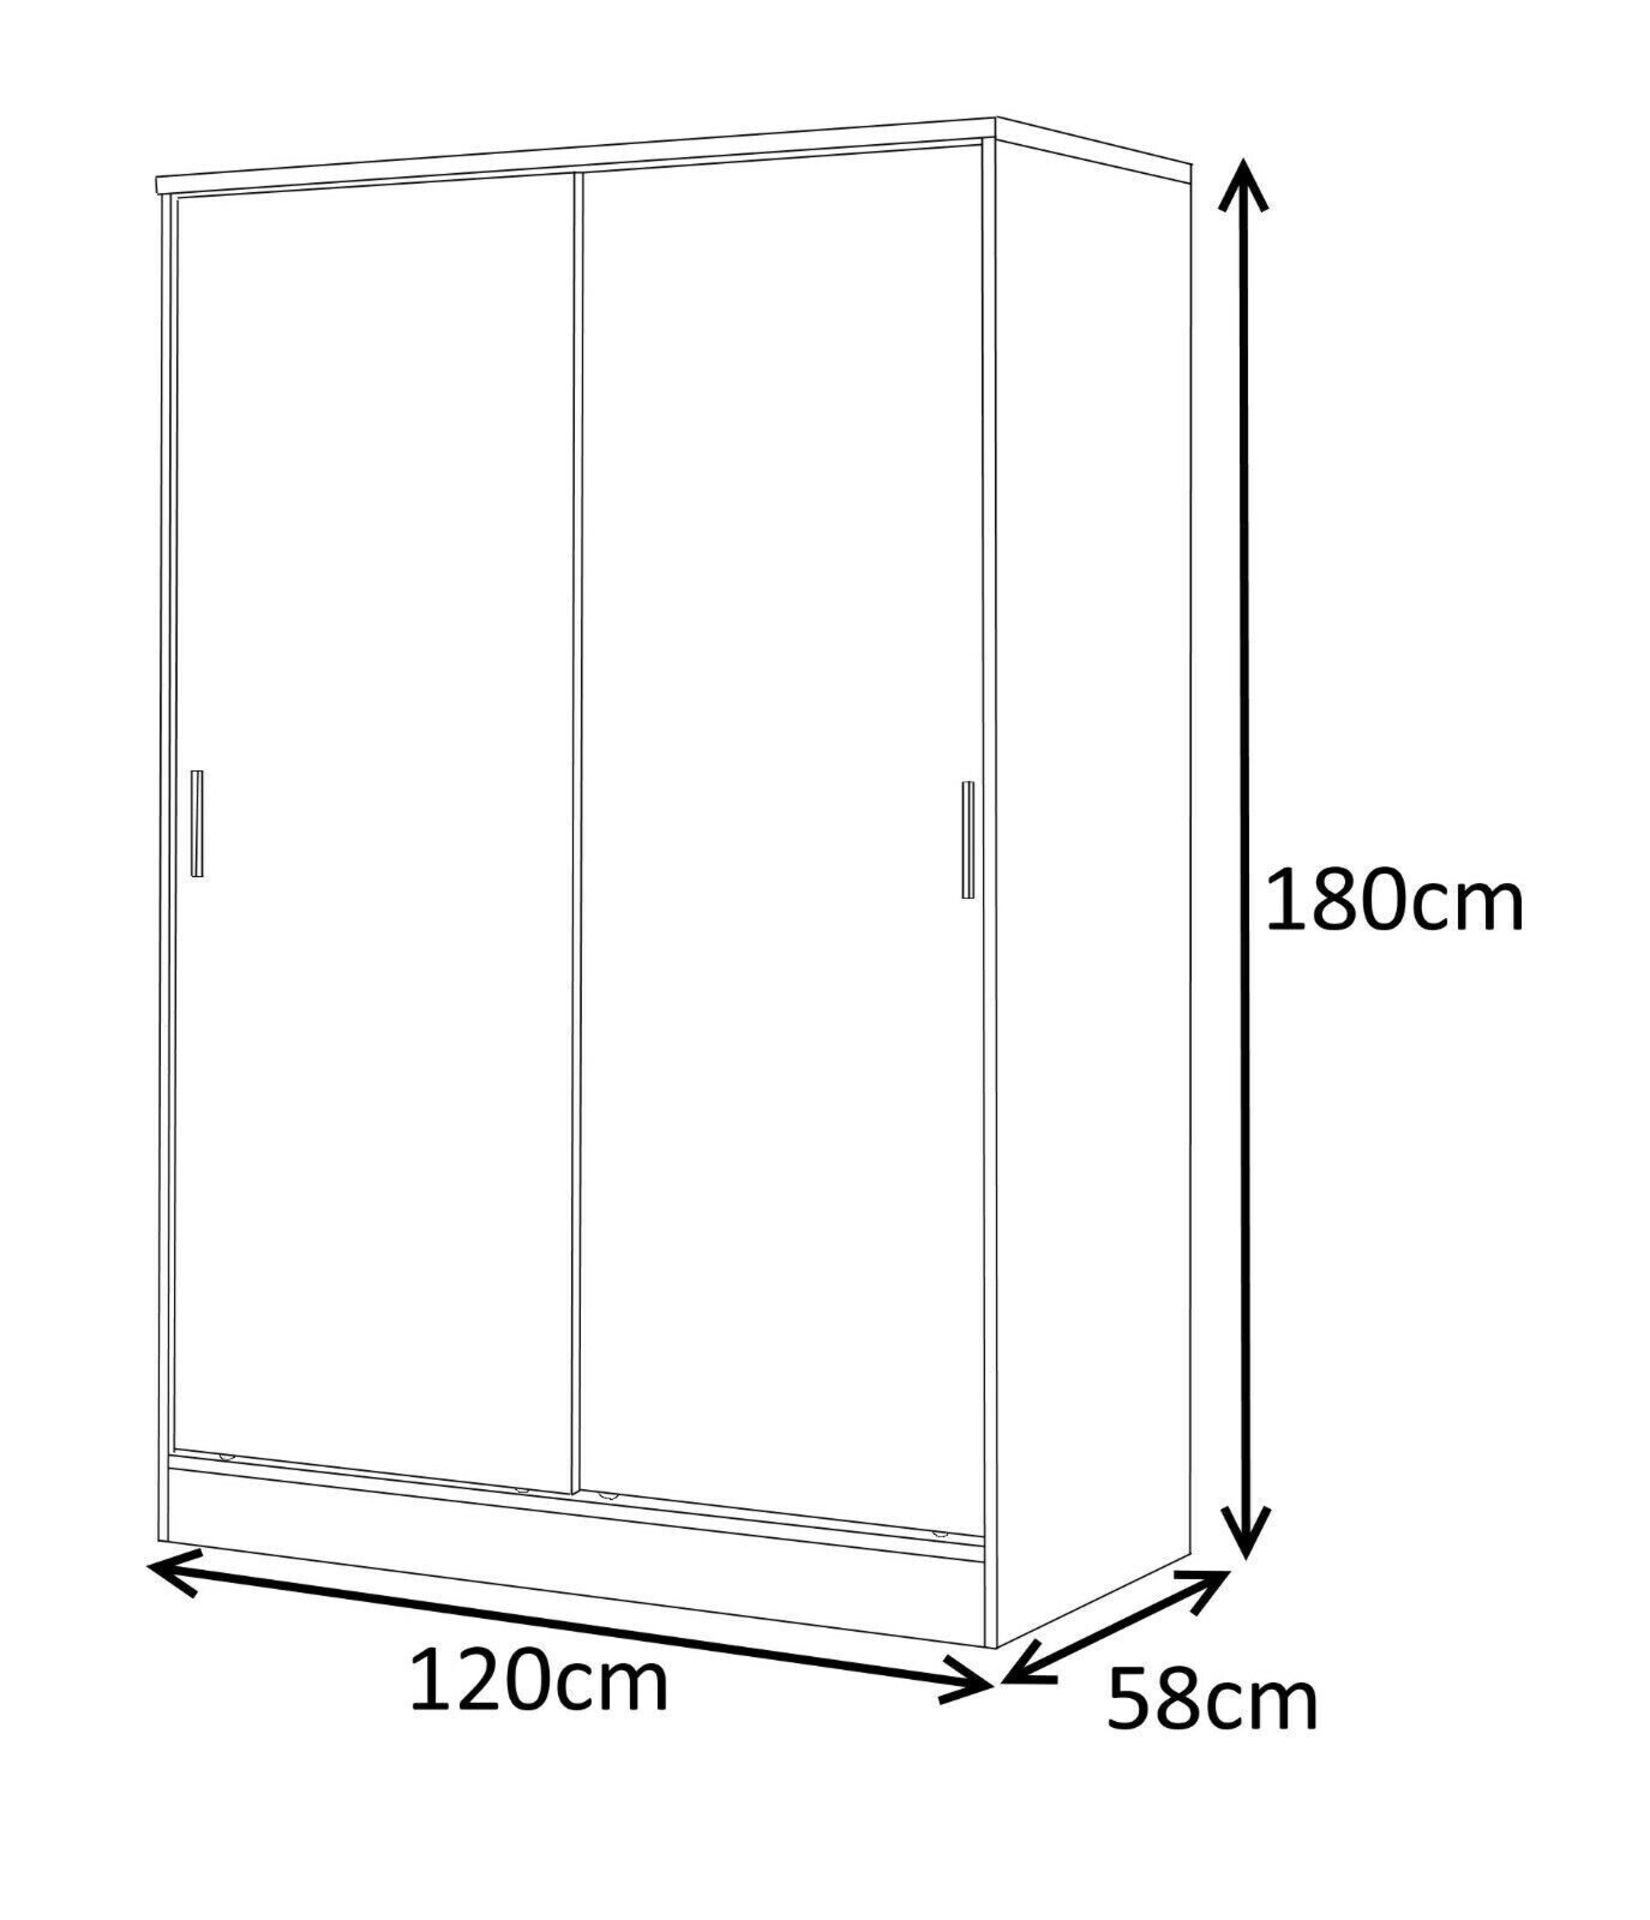 2 DOOR SLIDING WARDROBE XL HIGH GLOSS BEDROOM FURNITURE WHITE ON WHITE - Image 4 of 8